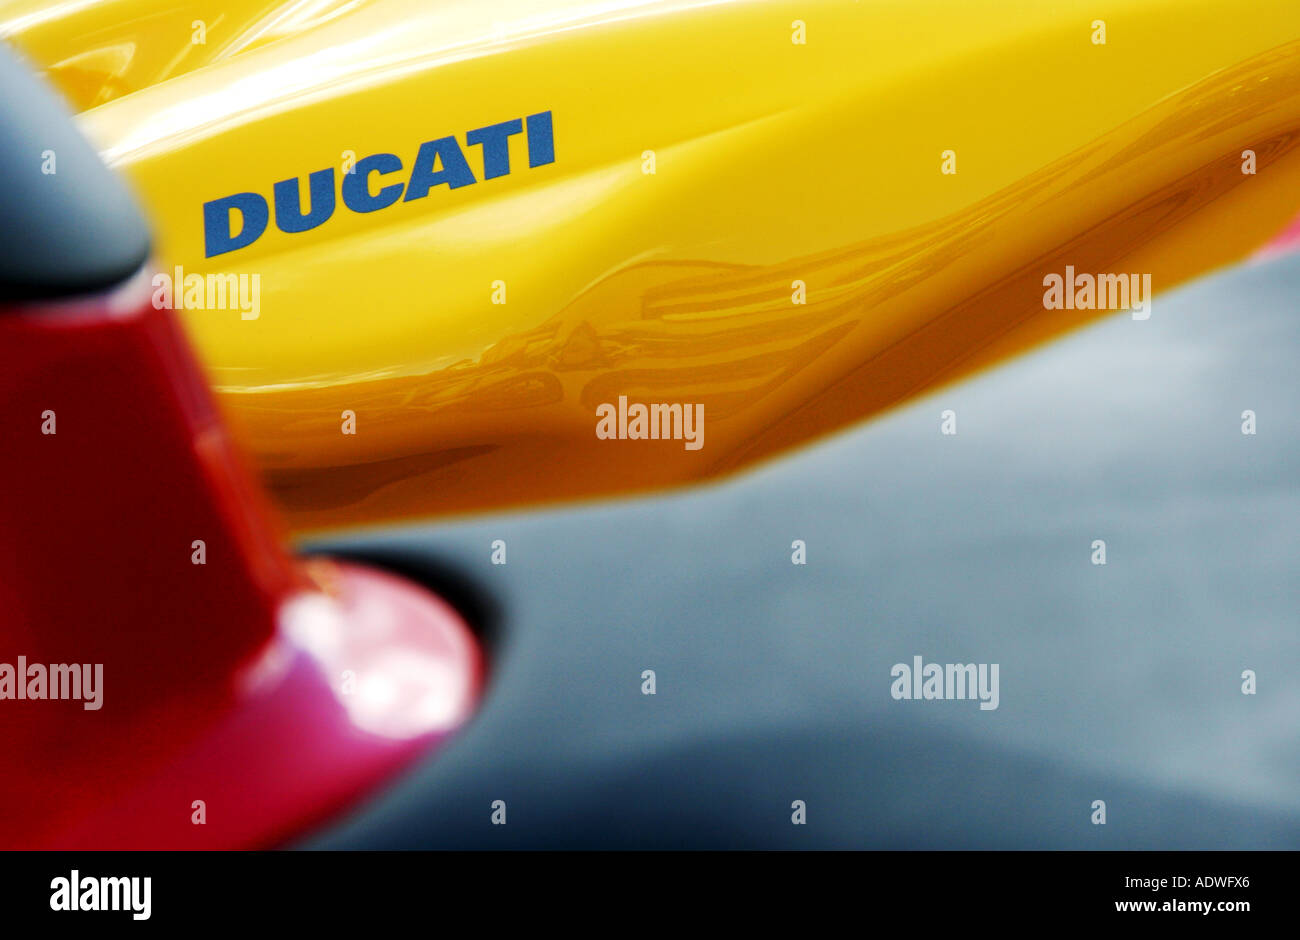 Ducati motorcycle petrol tanks Stock Photo